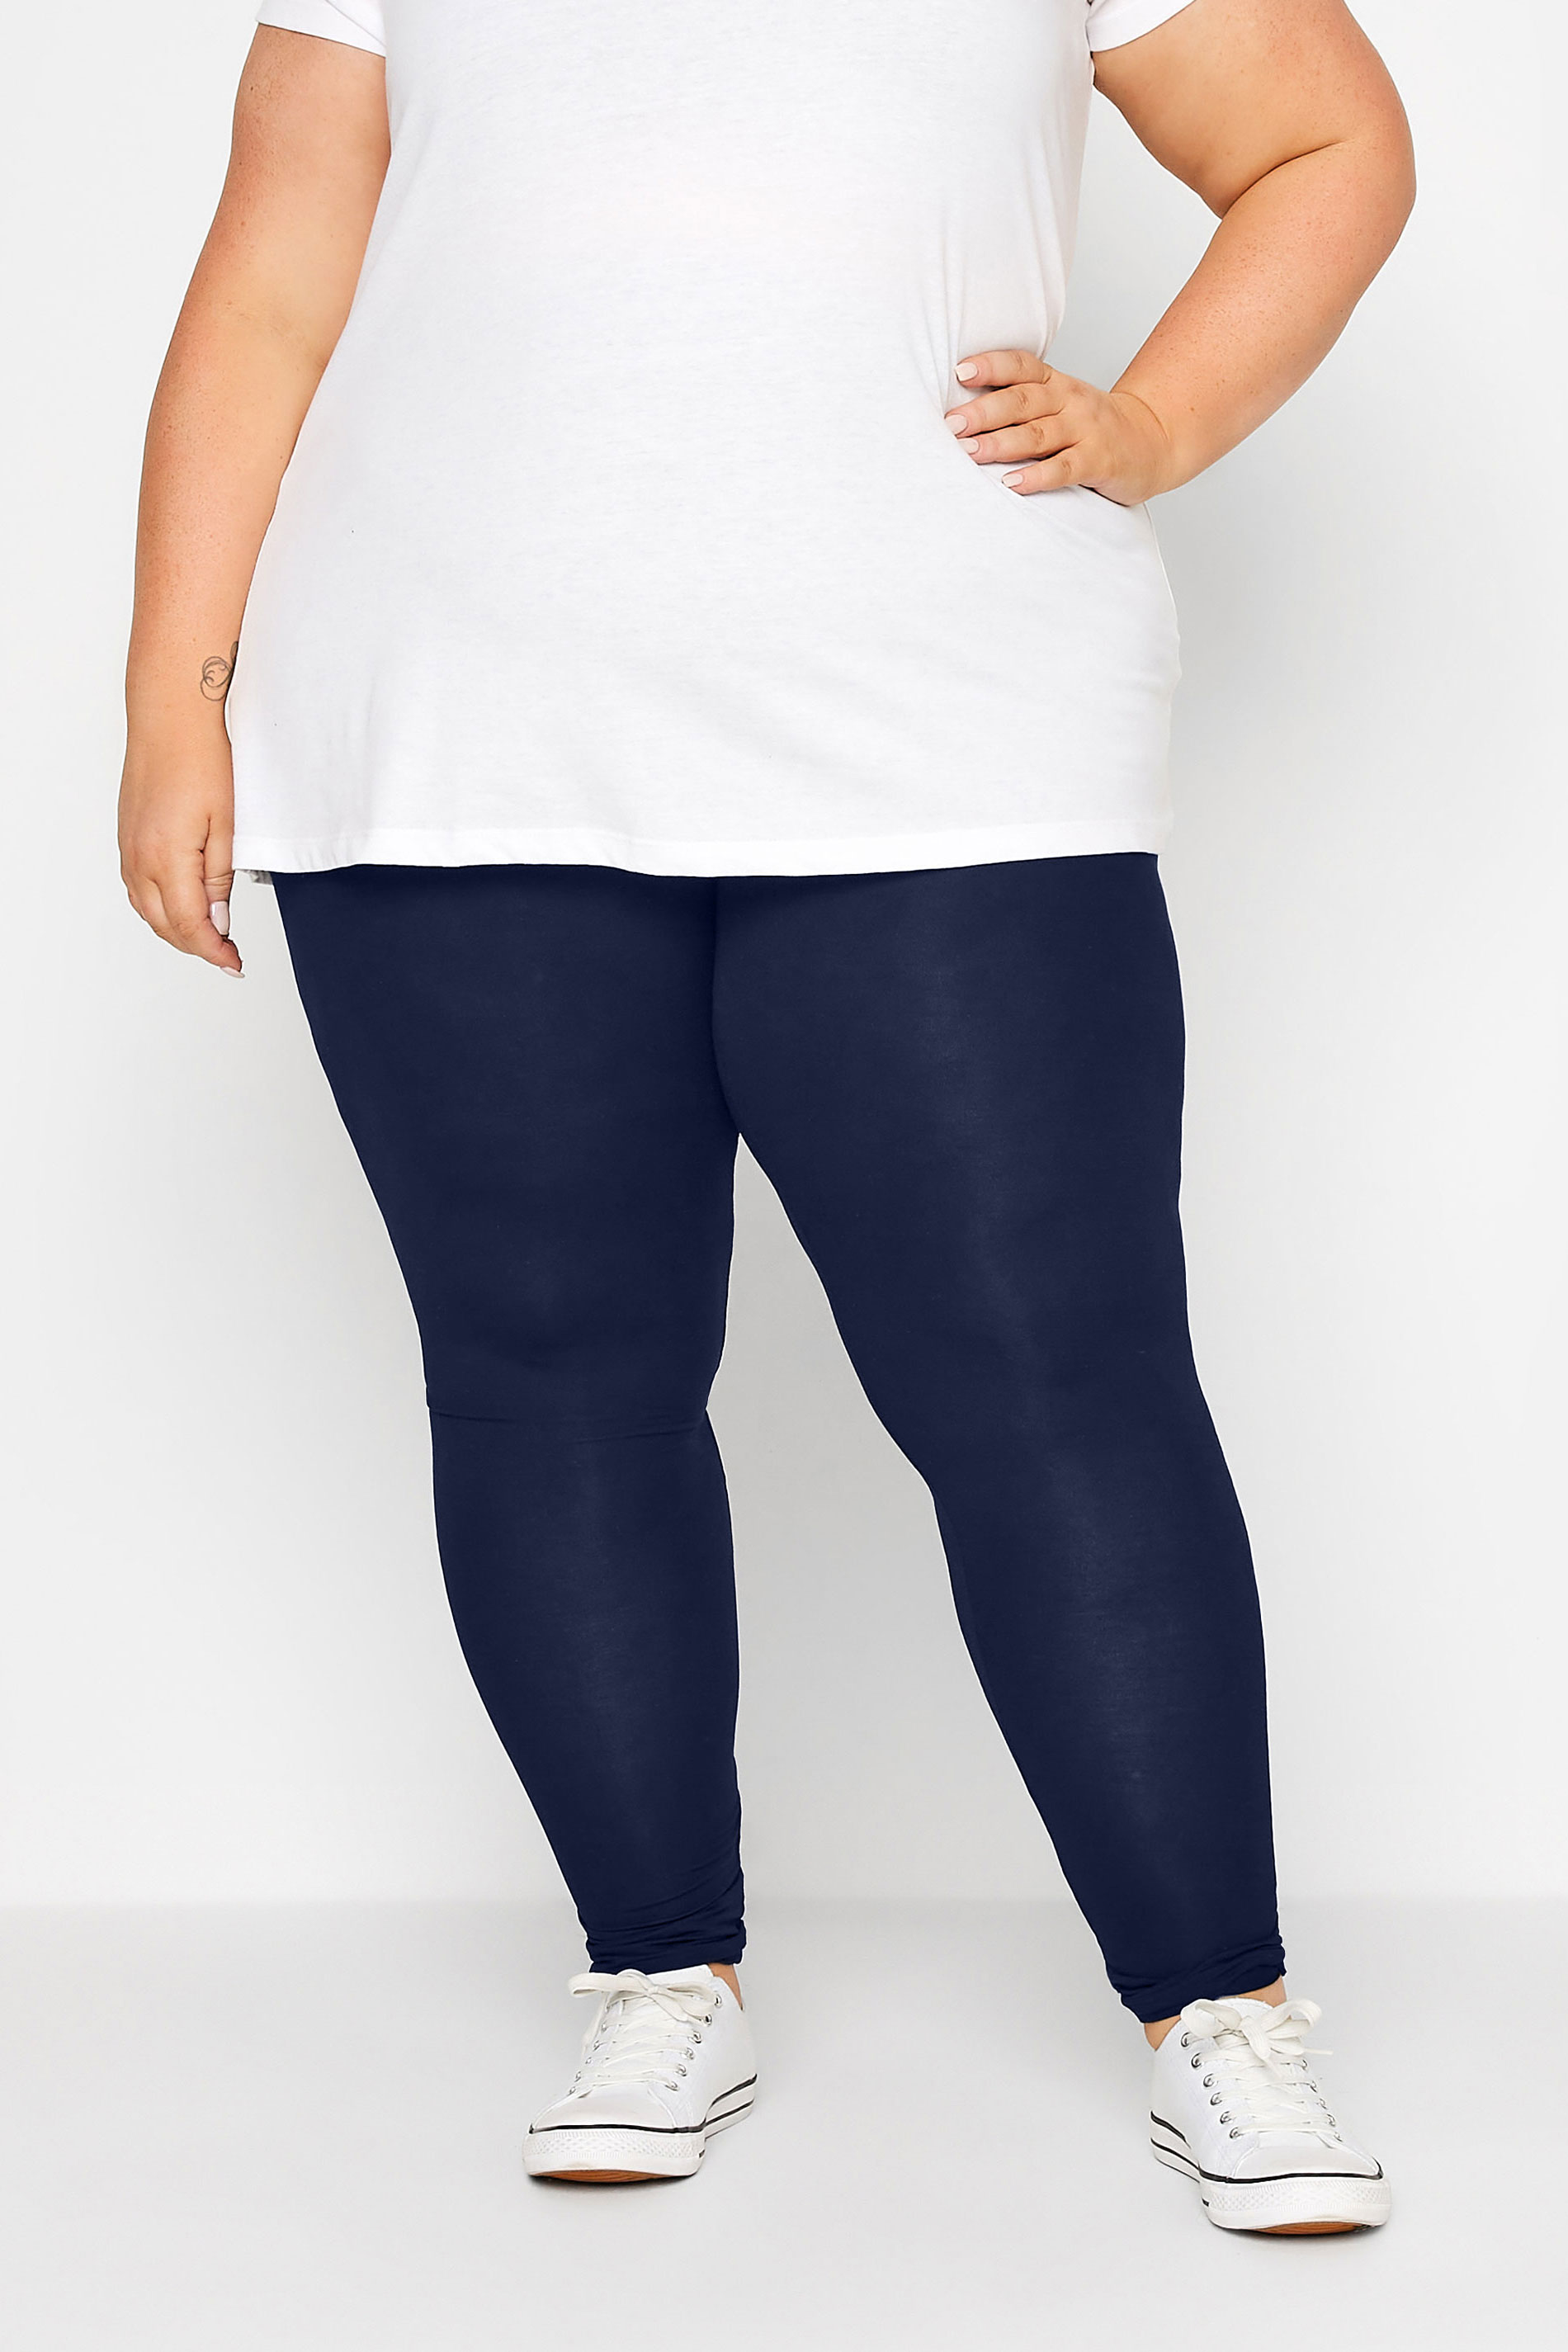 Buy Swastik Stuffs Women's Slim Fit Cotton Blend Leggings  (SSAL-BBluS3_Black, Blue, Beige_XL) at Amazon.in